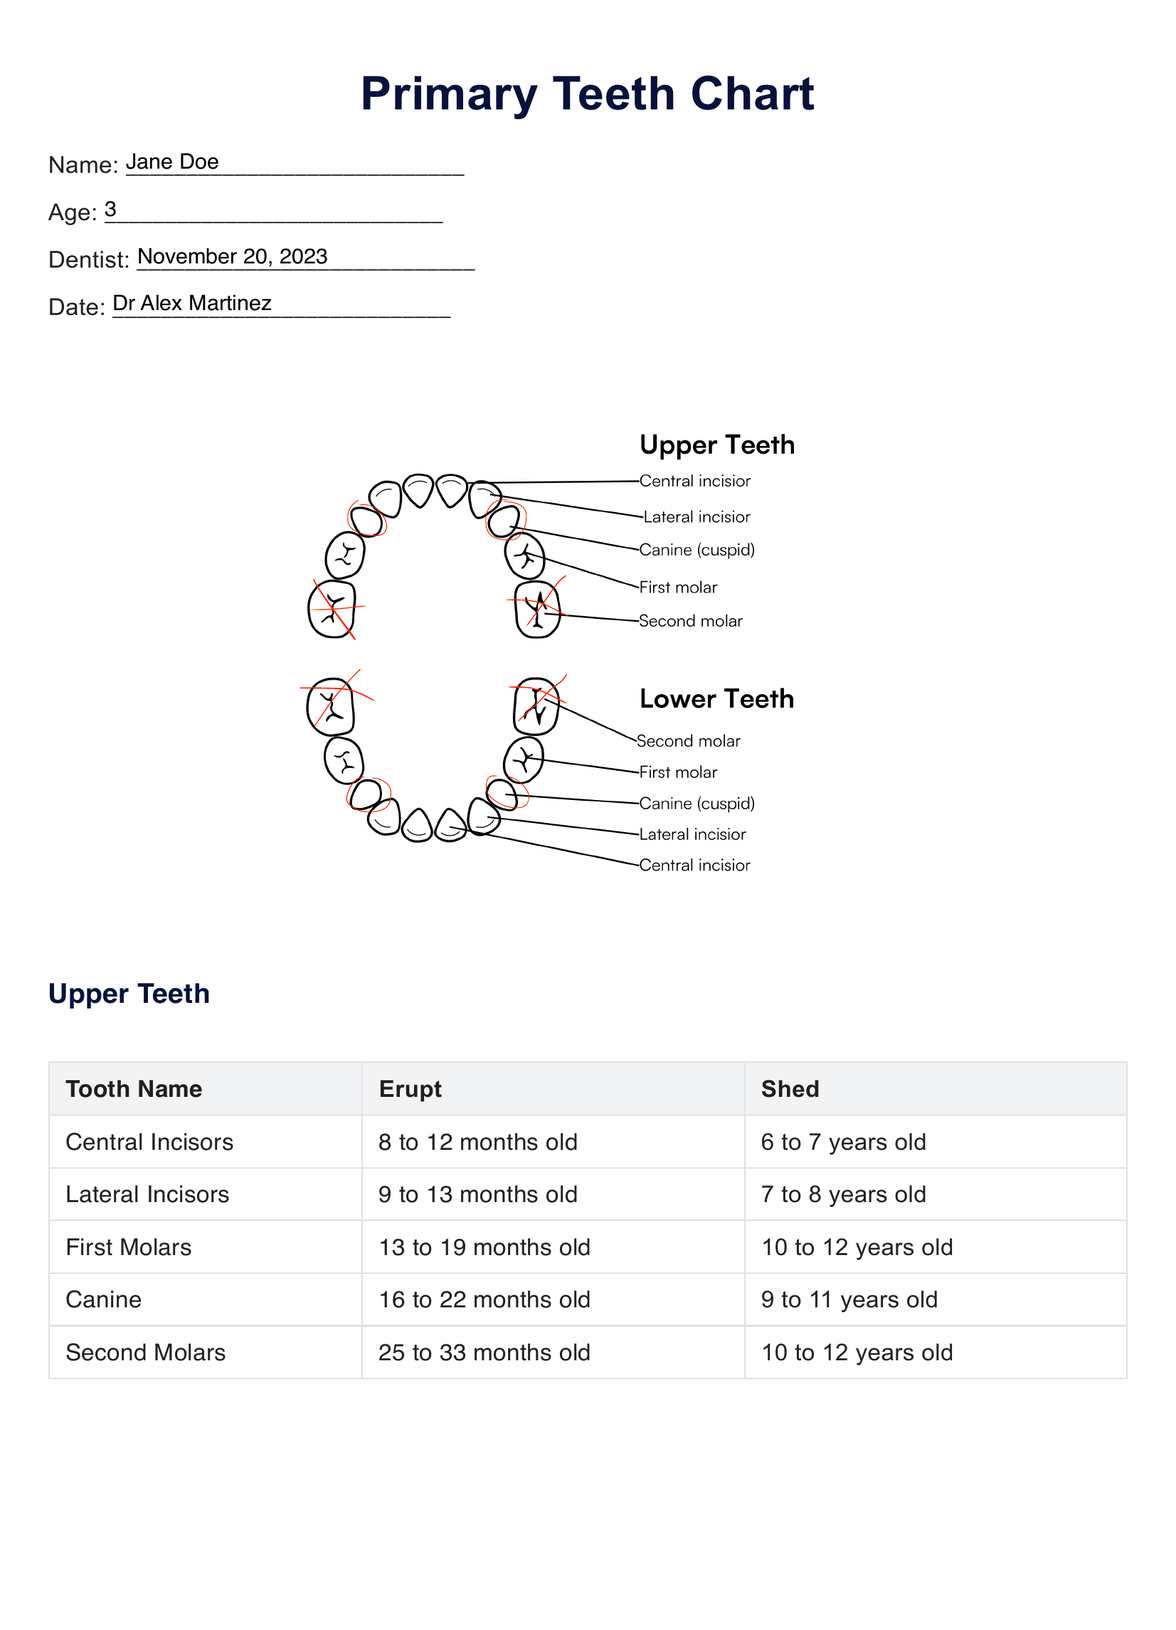 Primary Teeth PDF Example